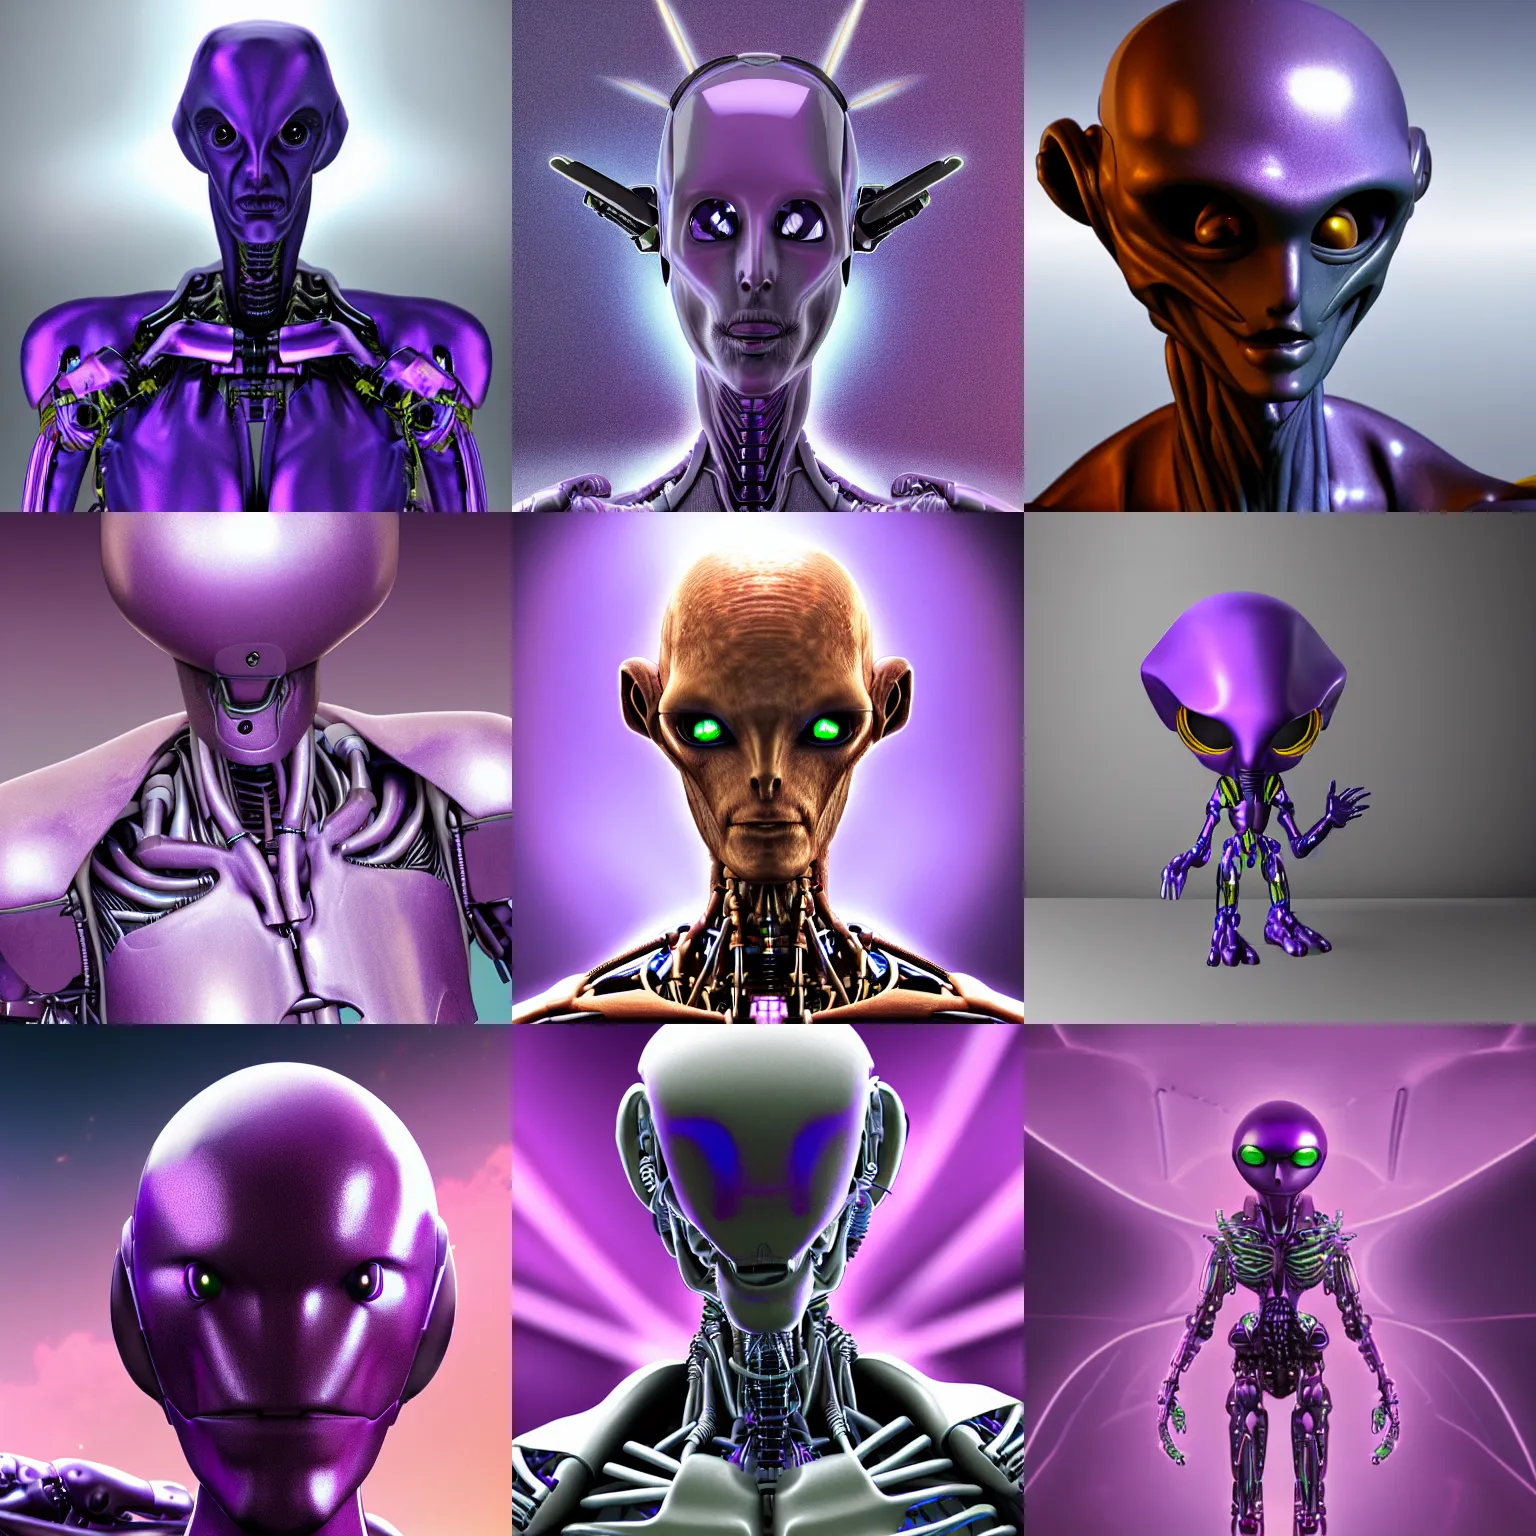 Prompt: photorealistic image of a purple cybernetic alien